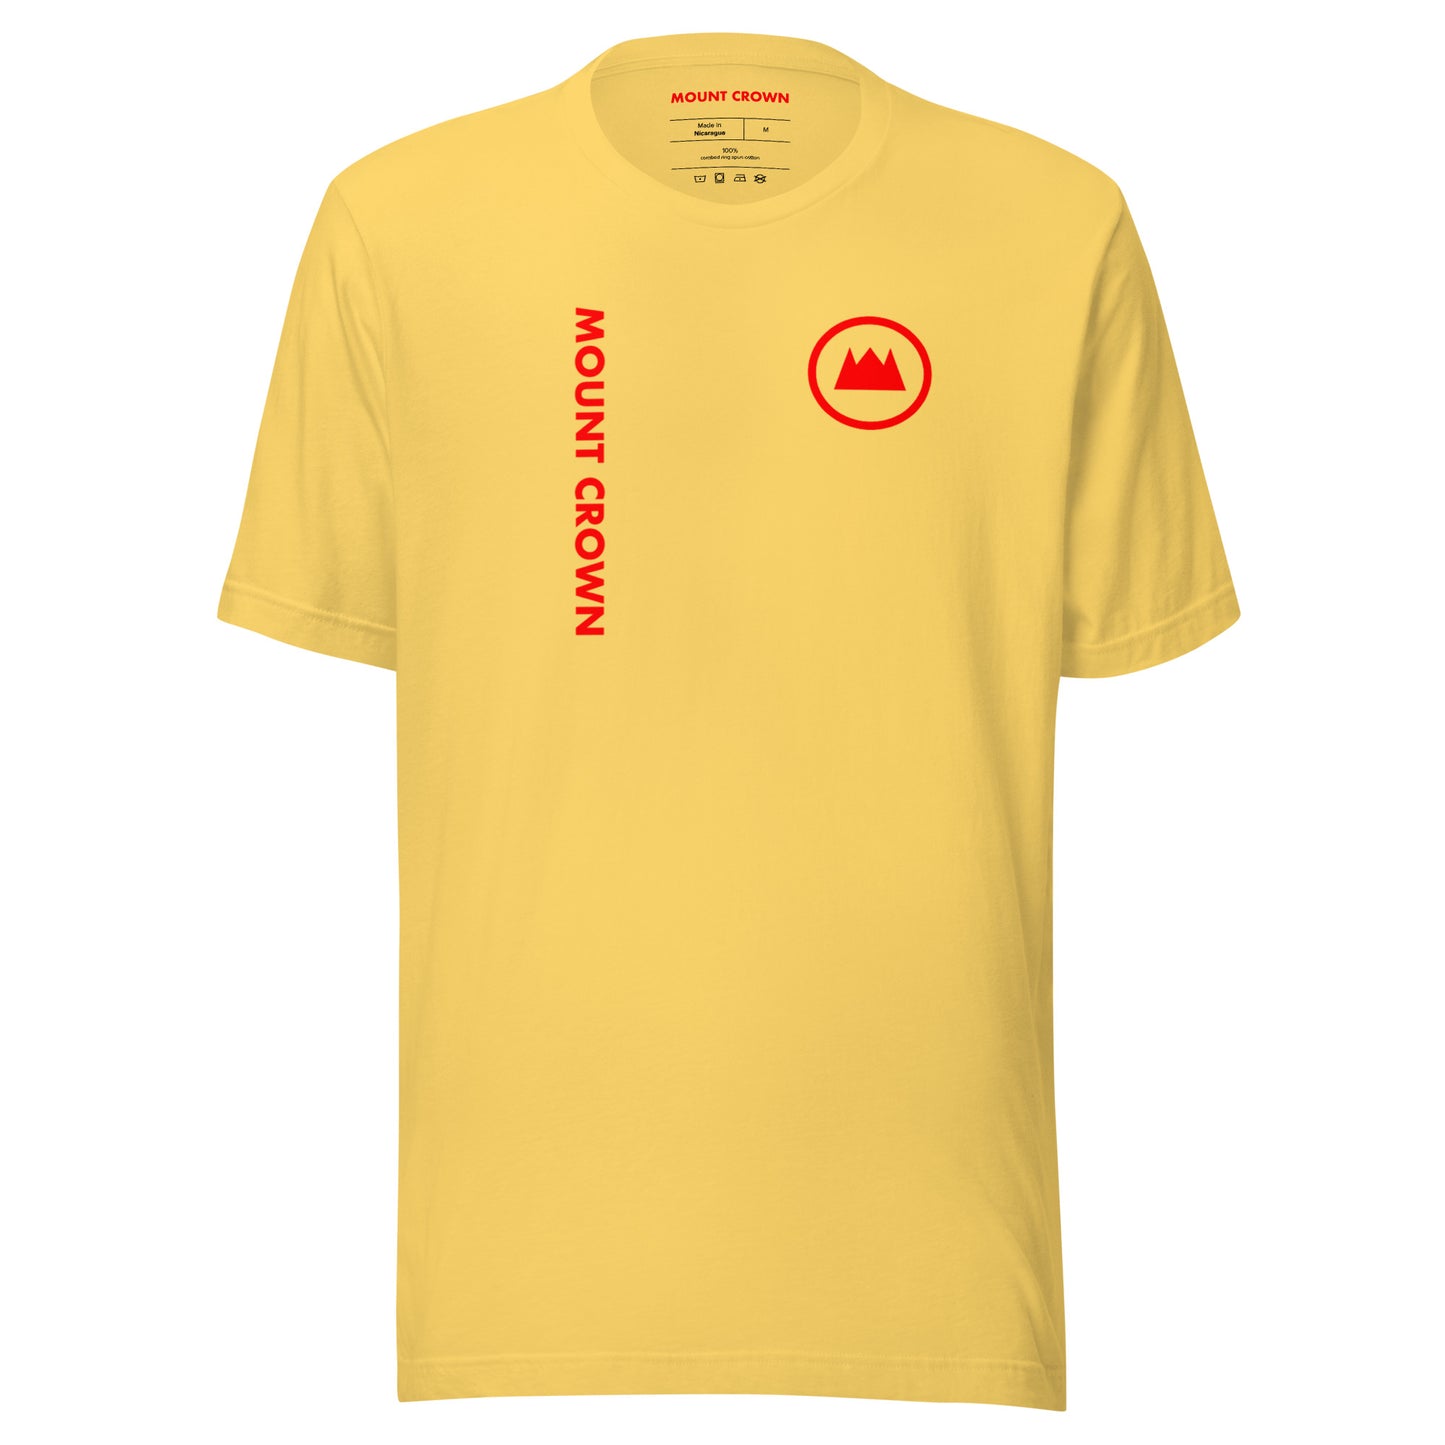 MOUNT CROWN (R)3 T-shirt